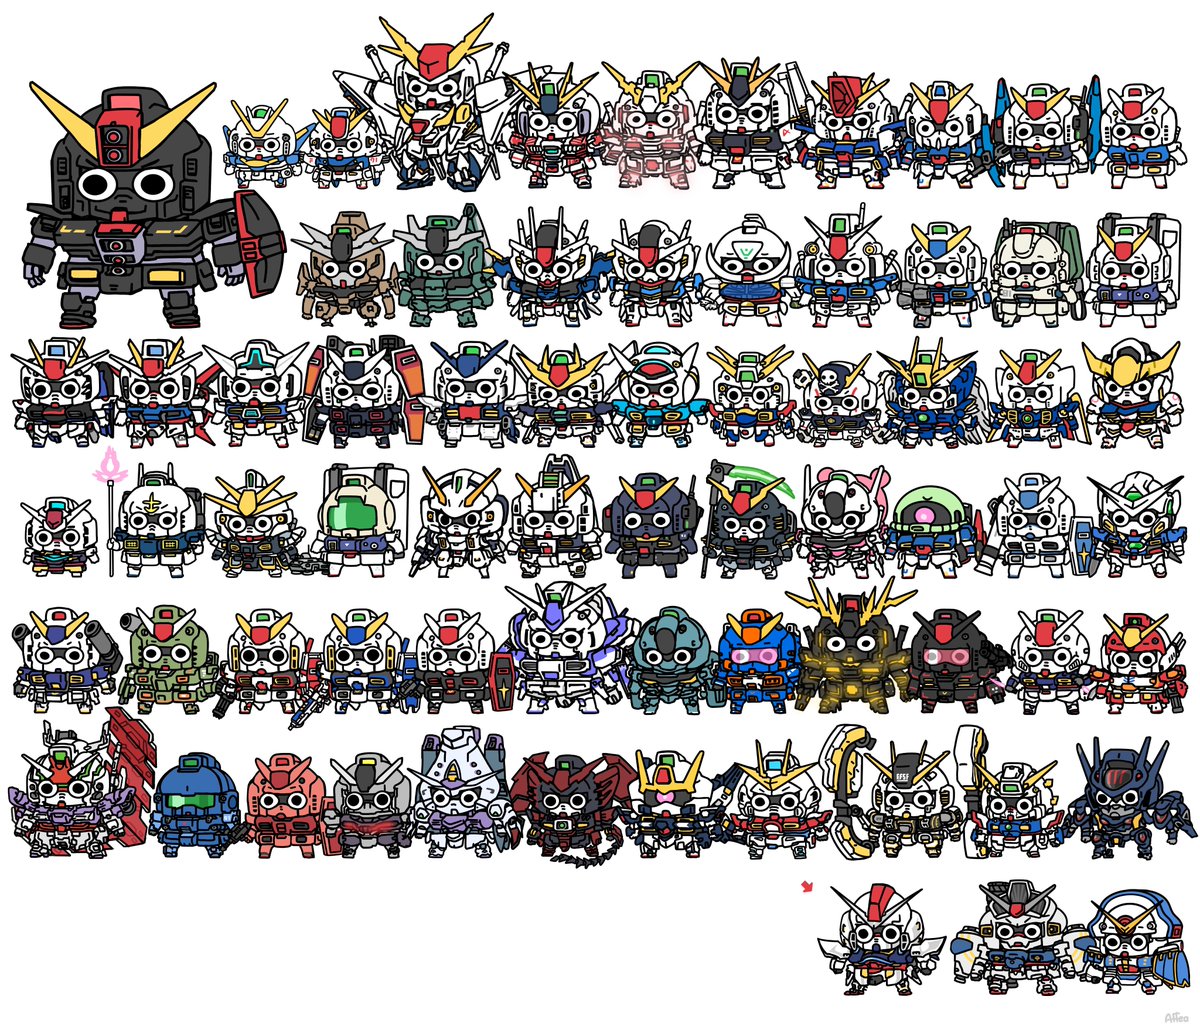 rx-78-2 robot mecha v-fin no humans chibi multiple crossover mobile suit  illustration images